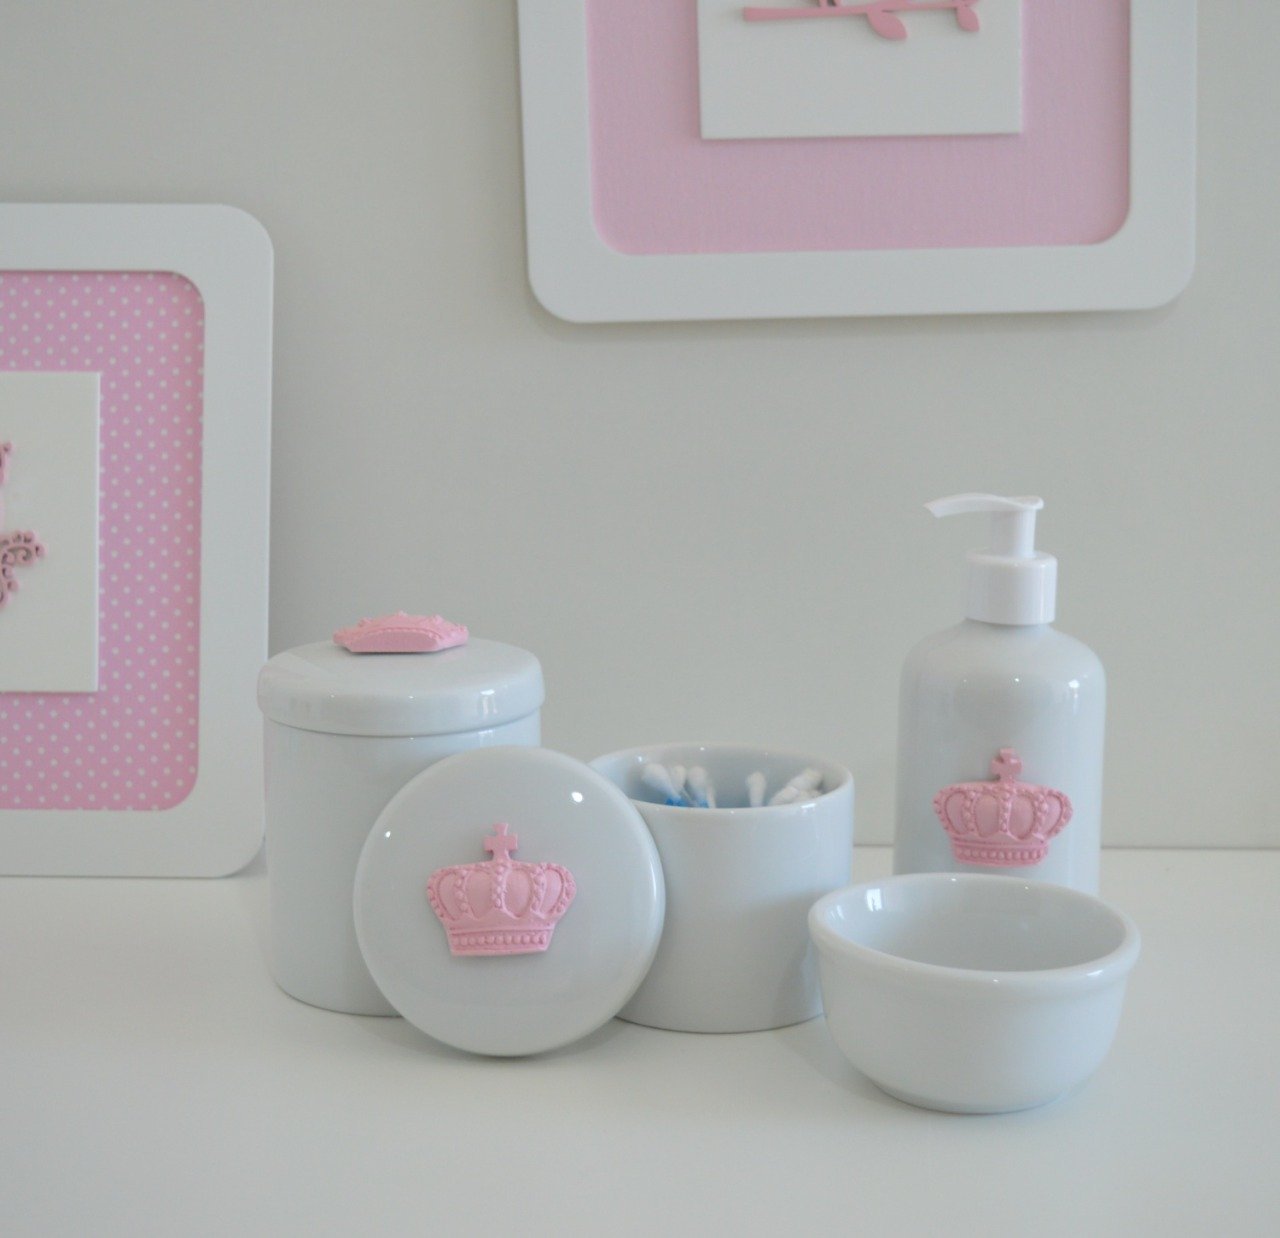 Kit Higiene Porcelana Bebê Maternidade Montessoriano + Bandeja + Térmica  500ml - Verde Safari